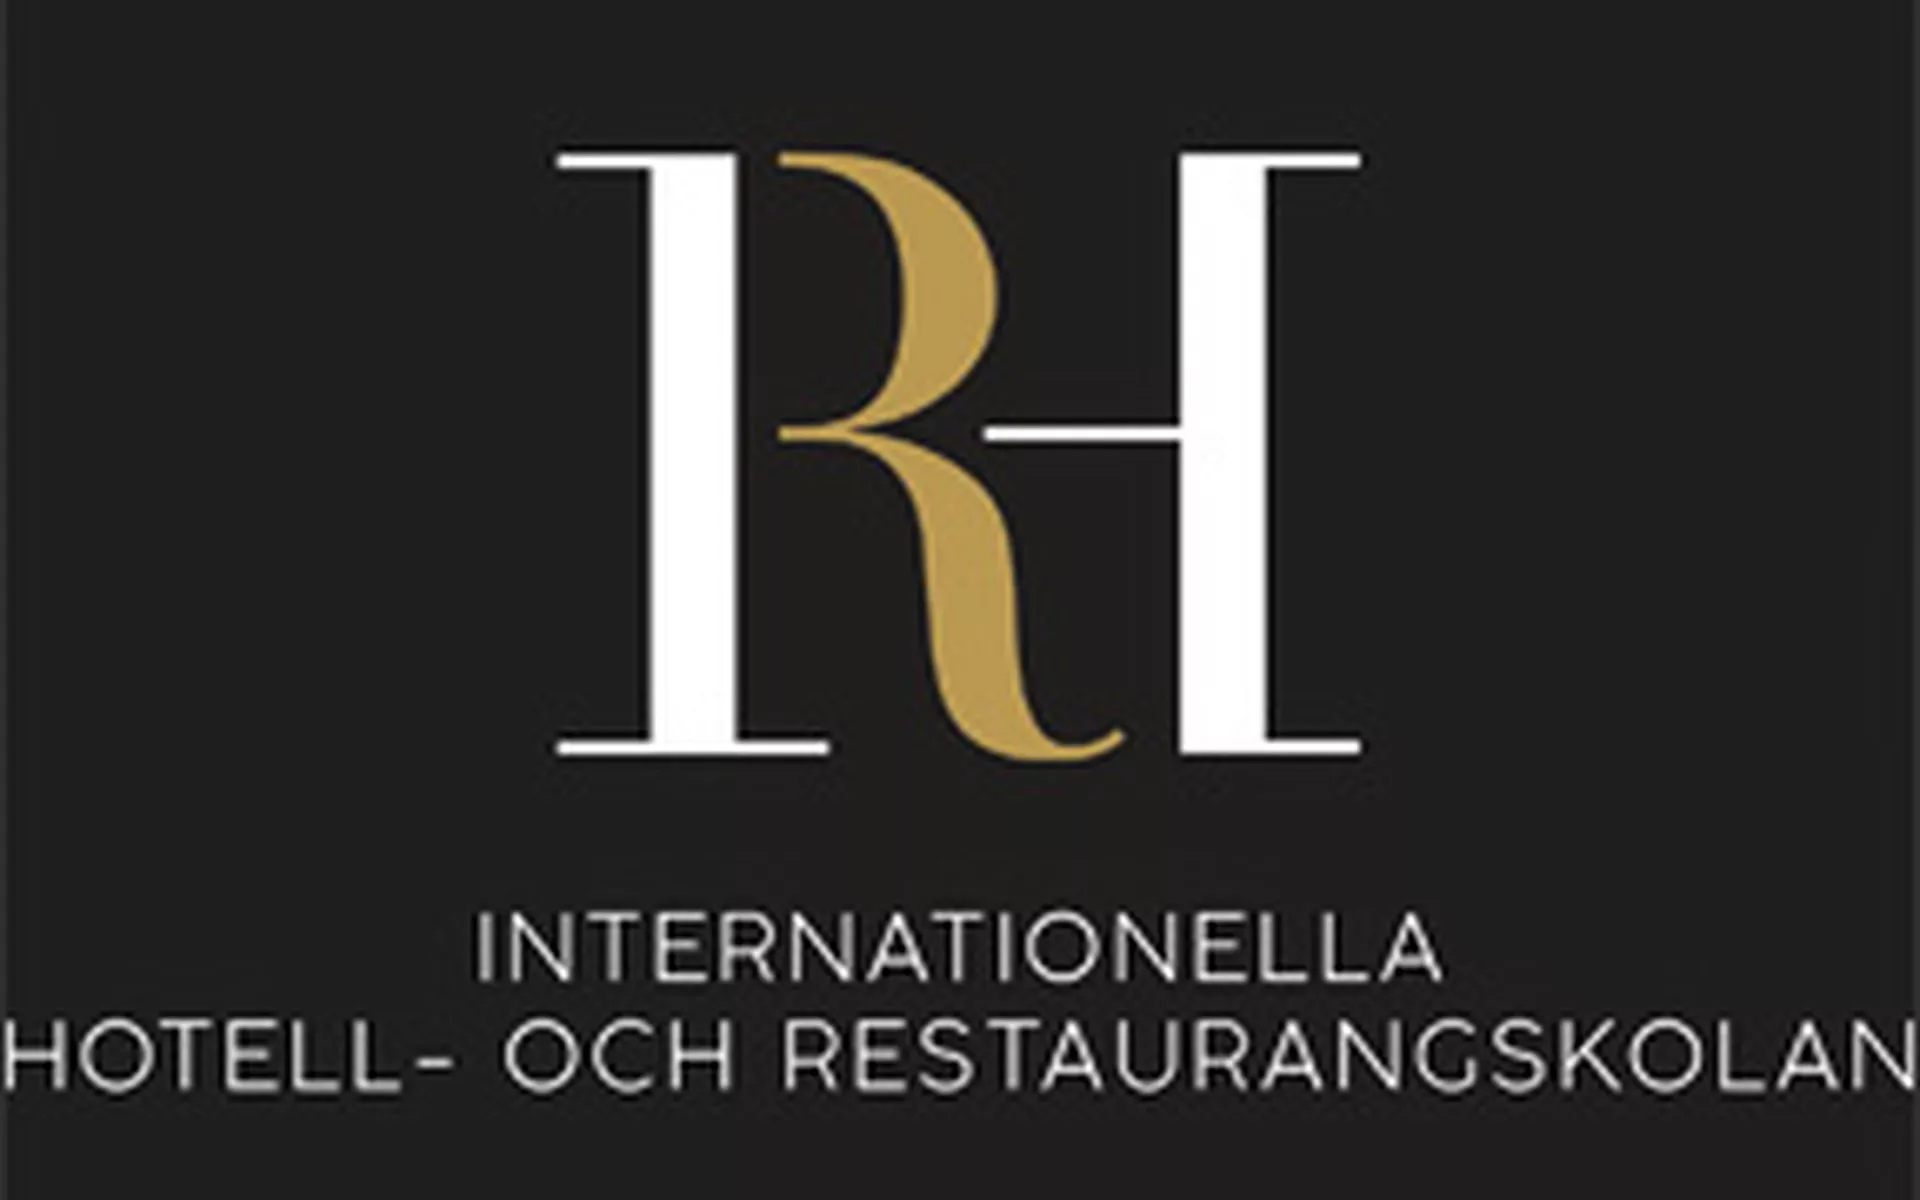 Internationella Hotell- och Restaurangskolan, IHR